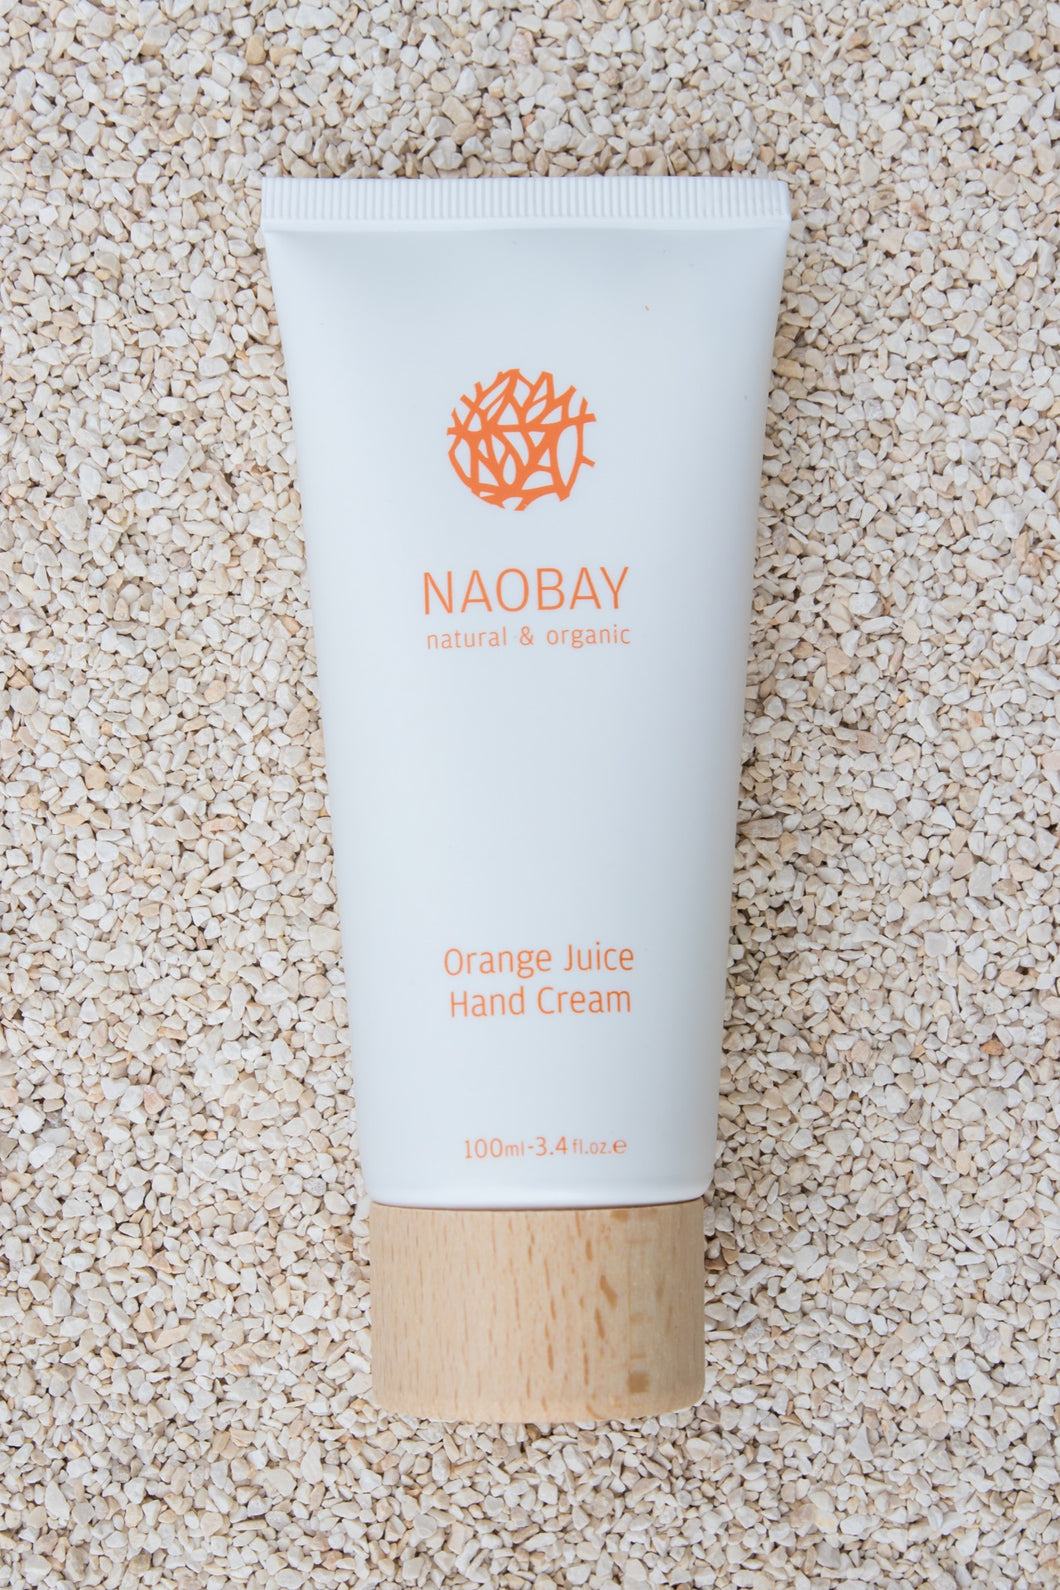 Orange Juice Hand Cream Naobay